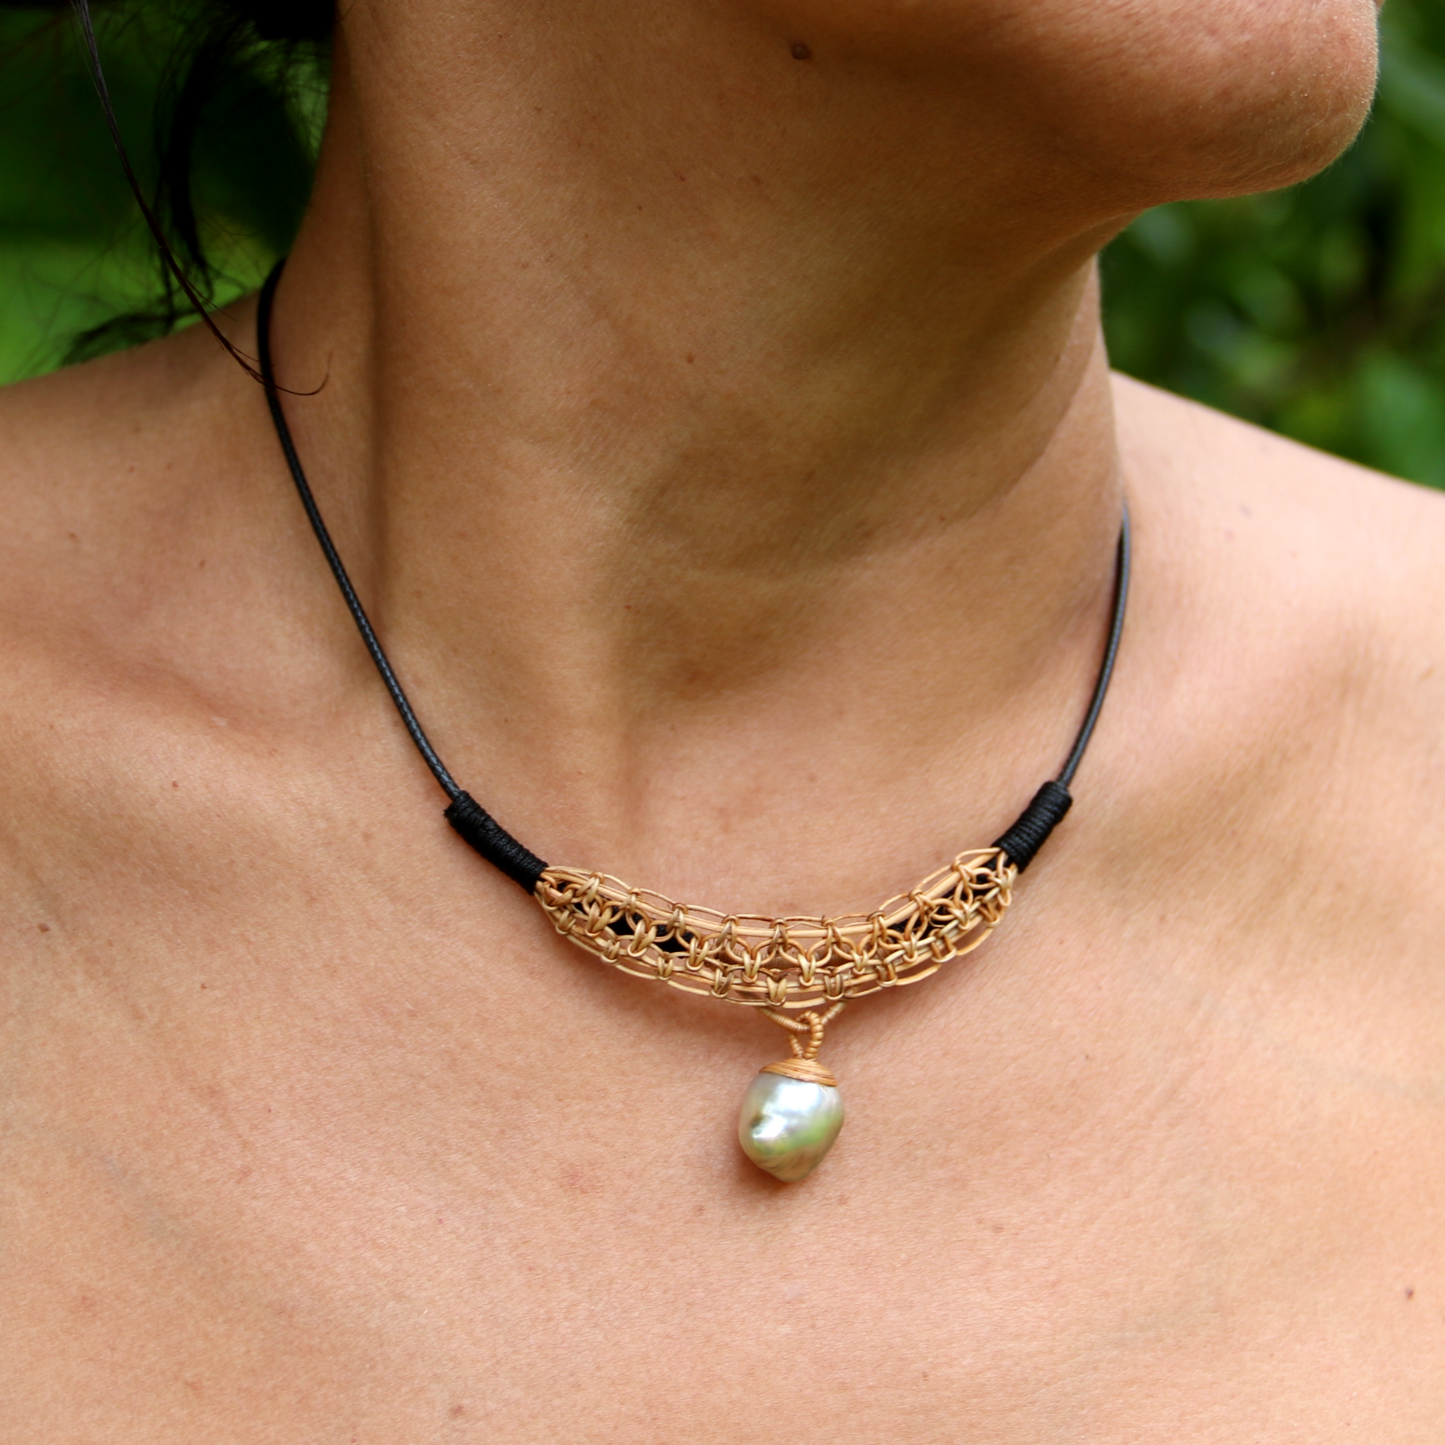 necklace tahitian pearl baroque handmade coconut fiber natural ethnic jewelry